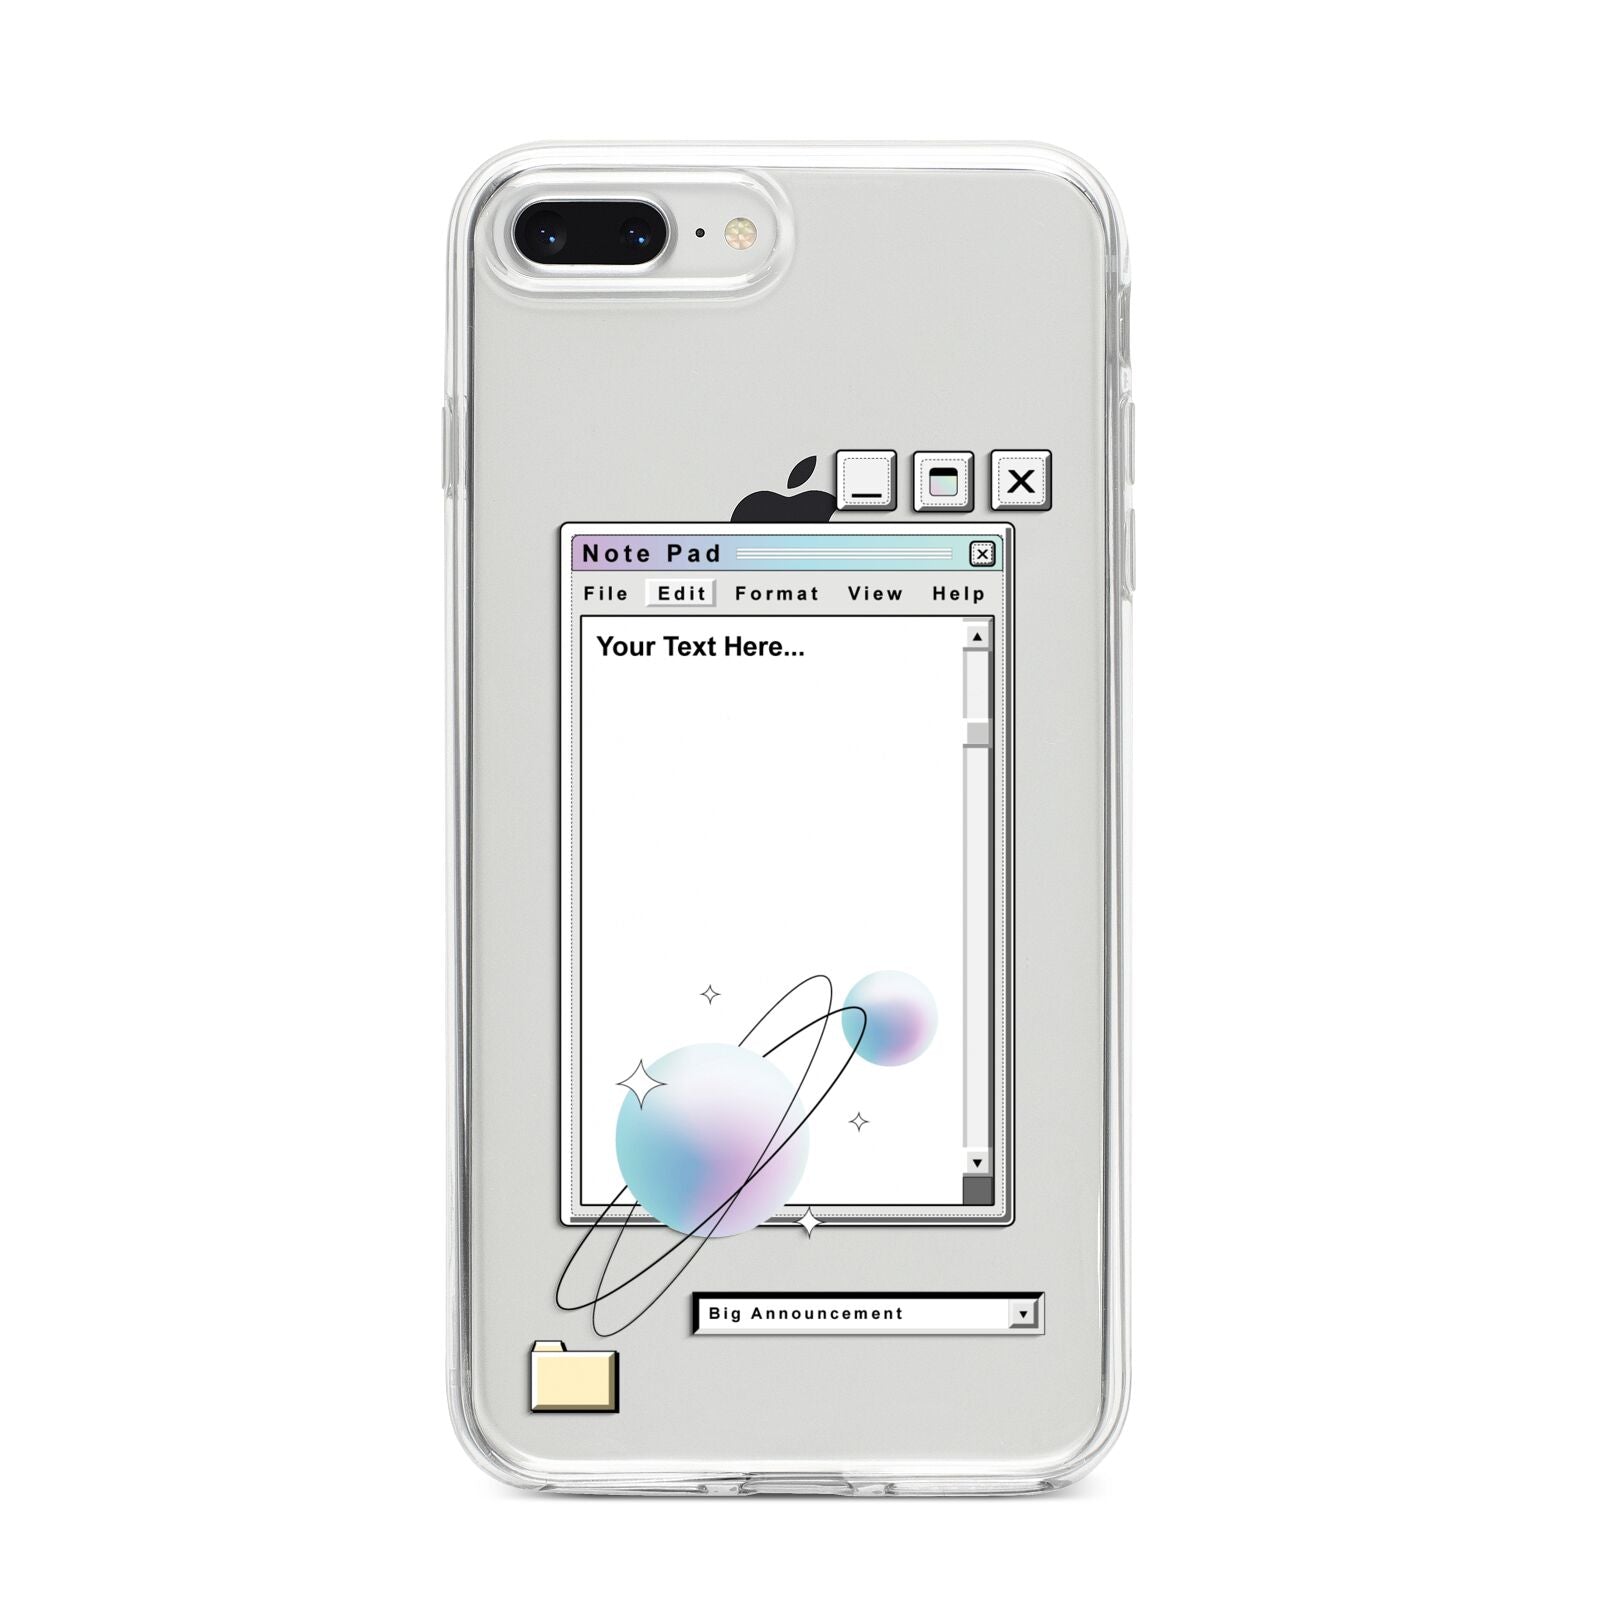 Retro Note Pad iPhone 8 Plus Bumper Case on Silver iPhone